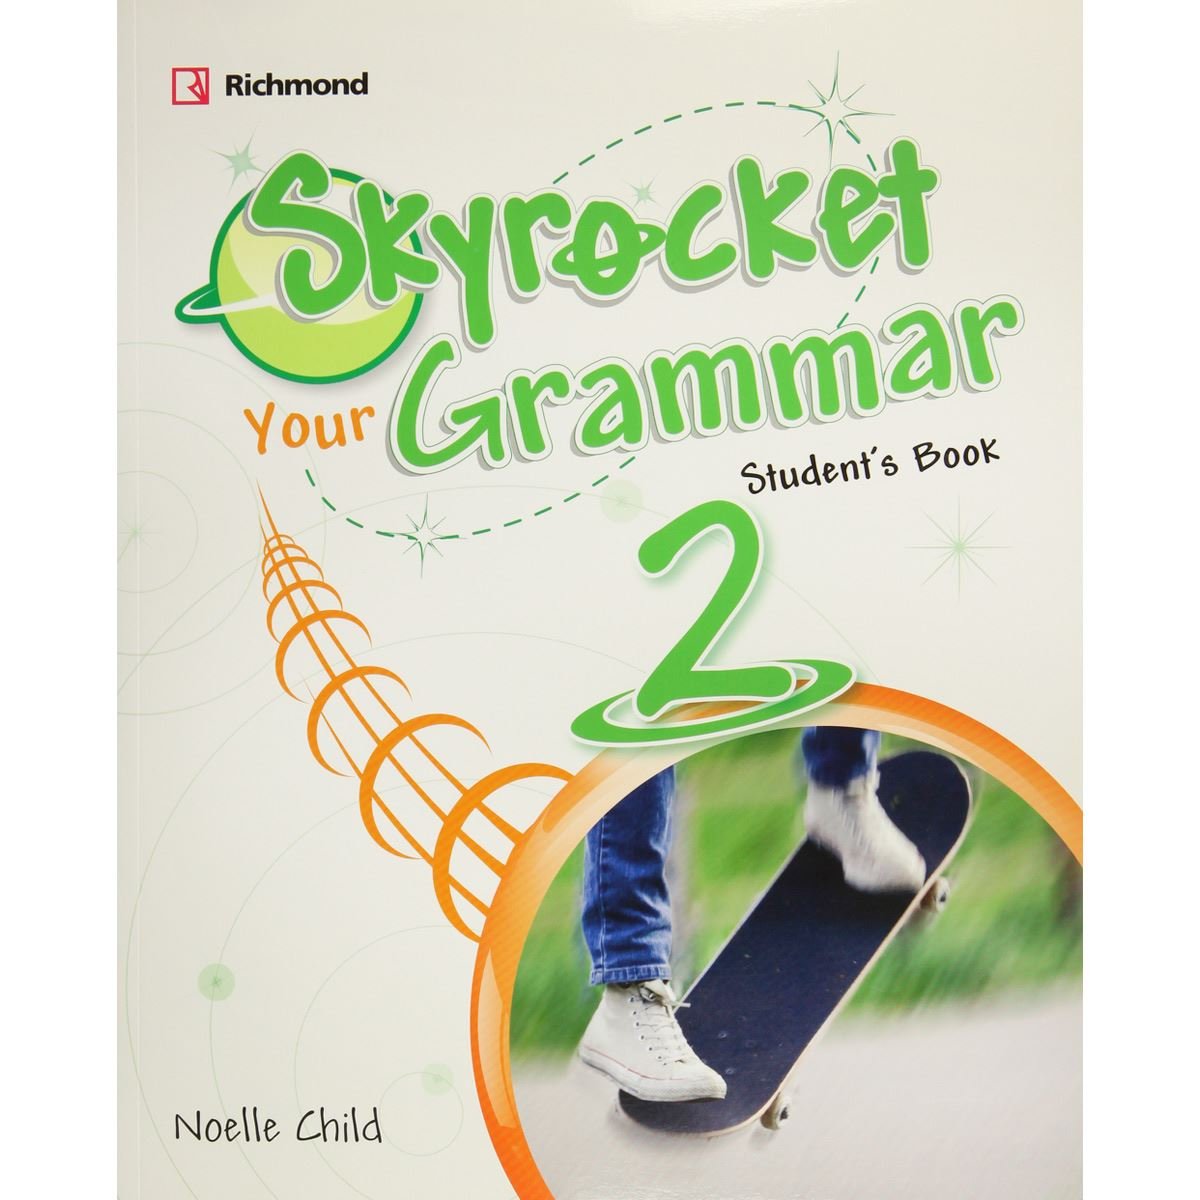 Skyrocket 2 Your Grammar StudentS Book